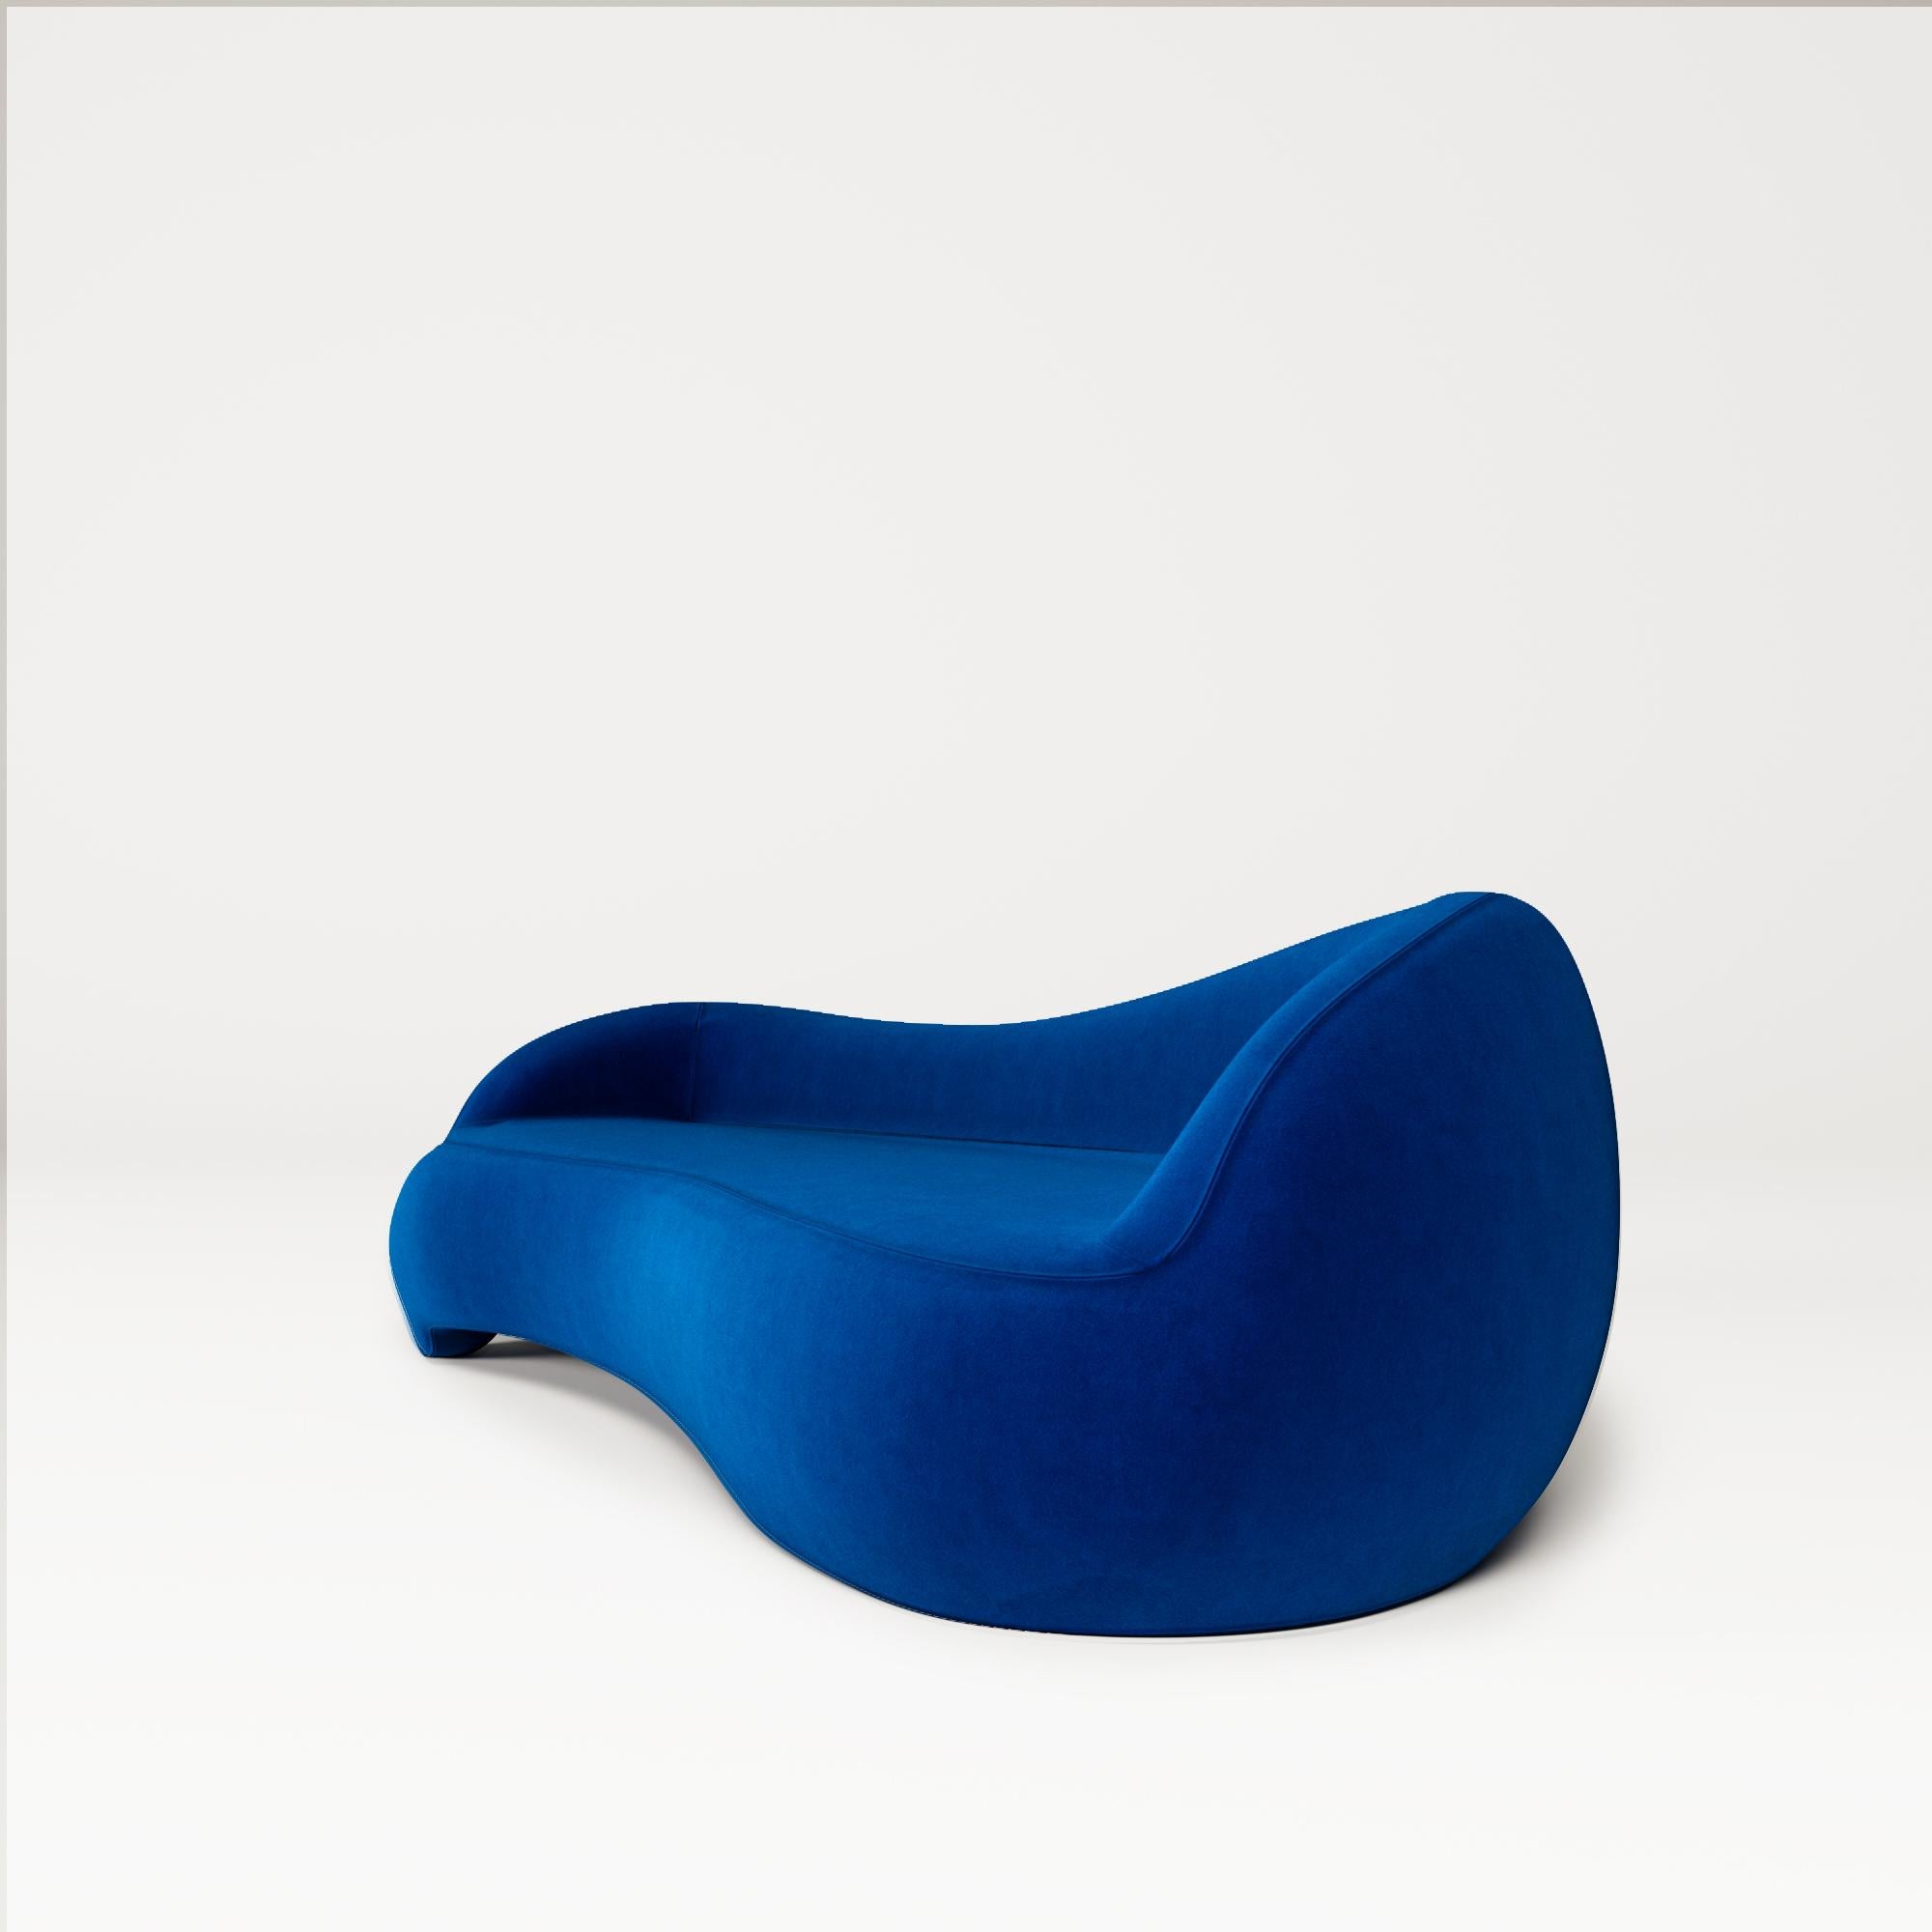 Hand-Crafted Pal-Up Sofa 280, Organic Modern, Flexib Velvet, by Mehmet Orel for Studio Kirkit For Sale